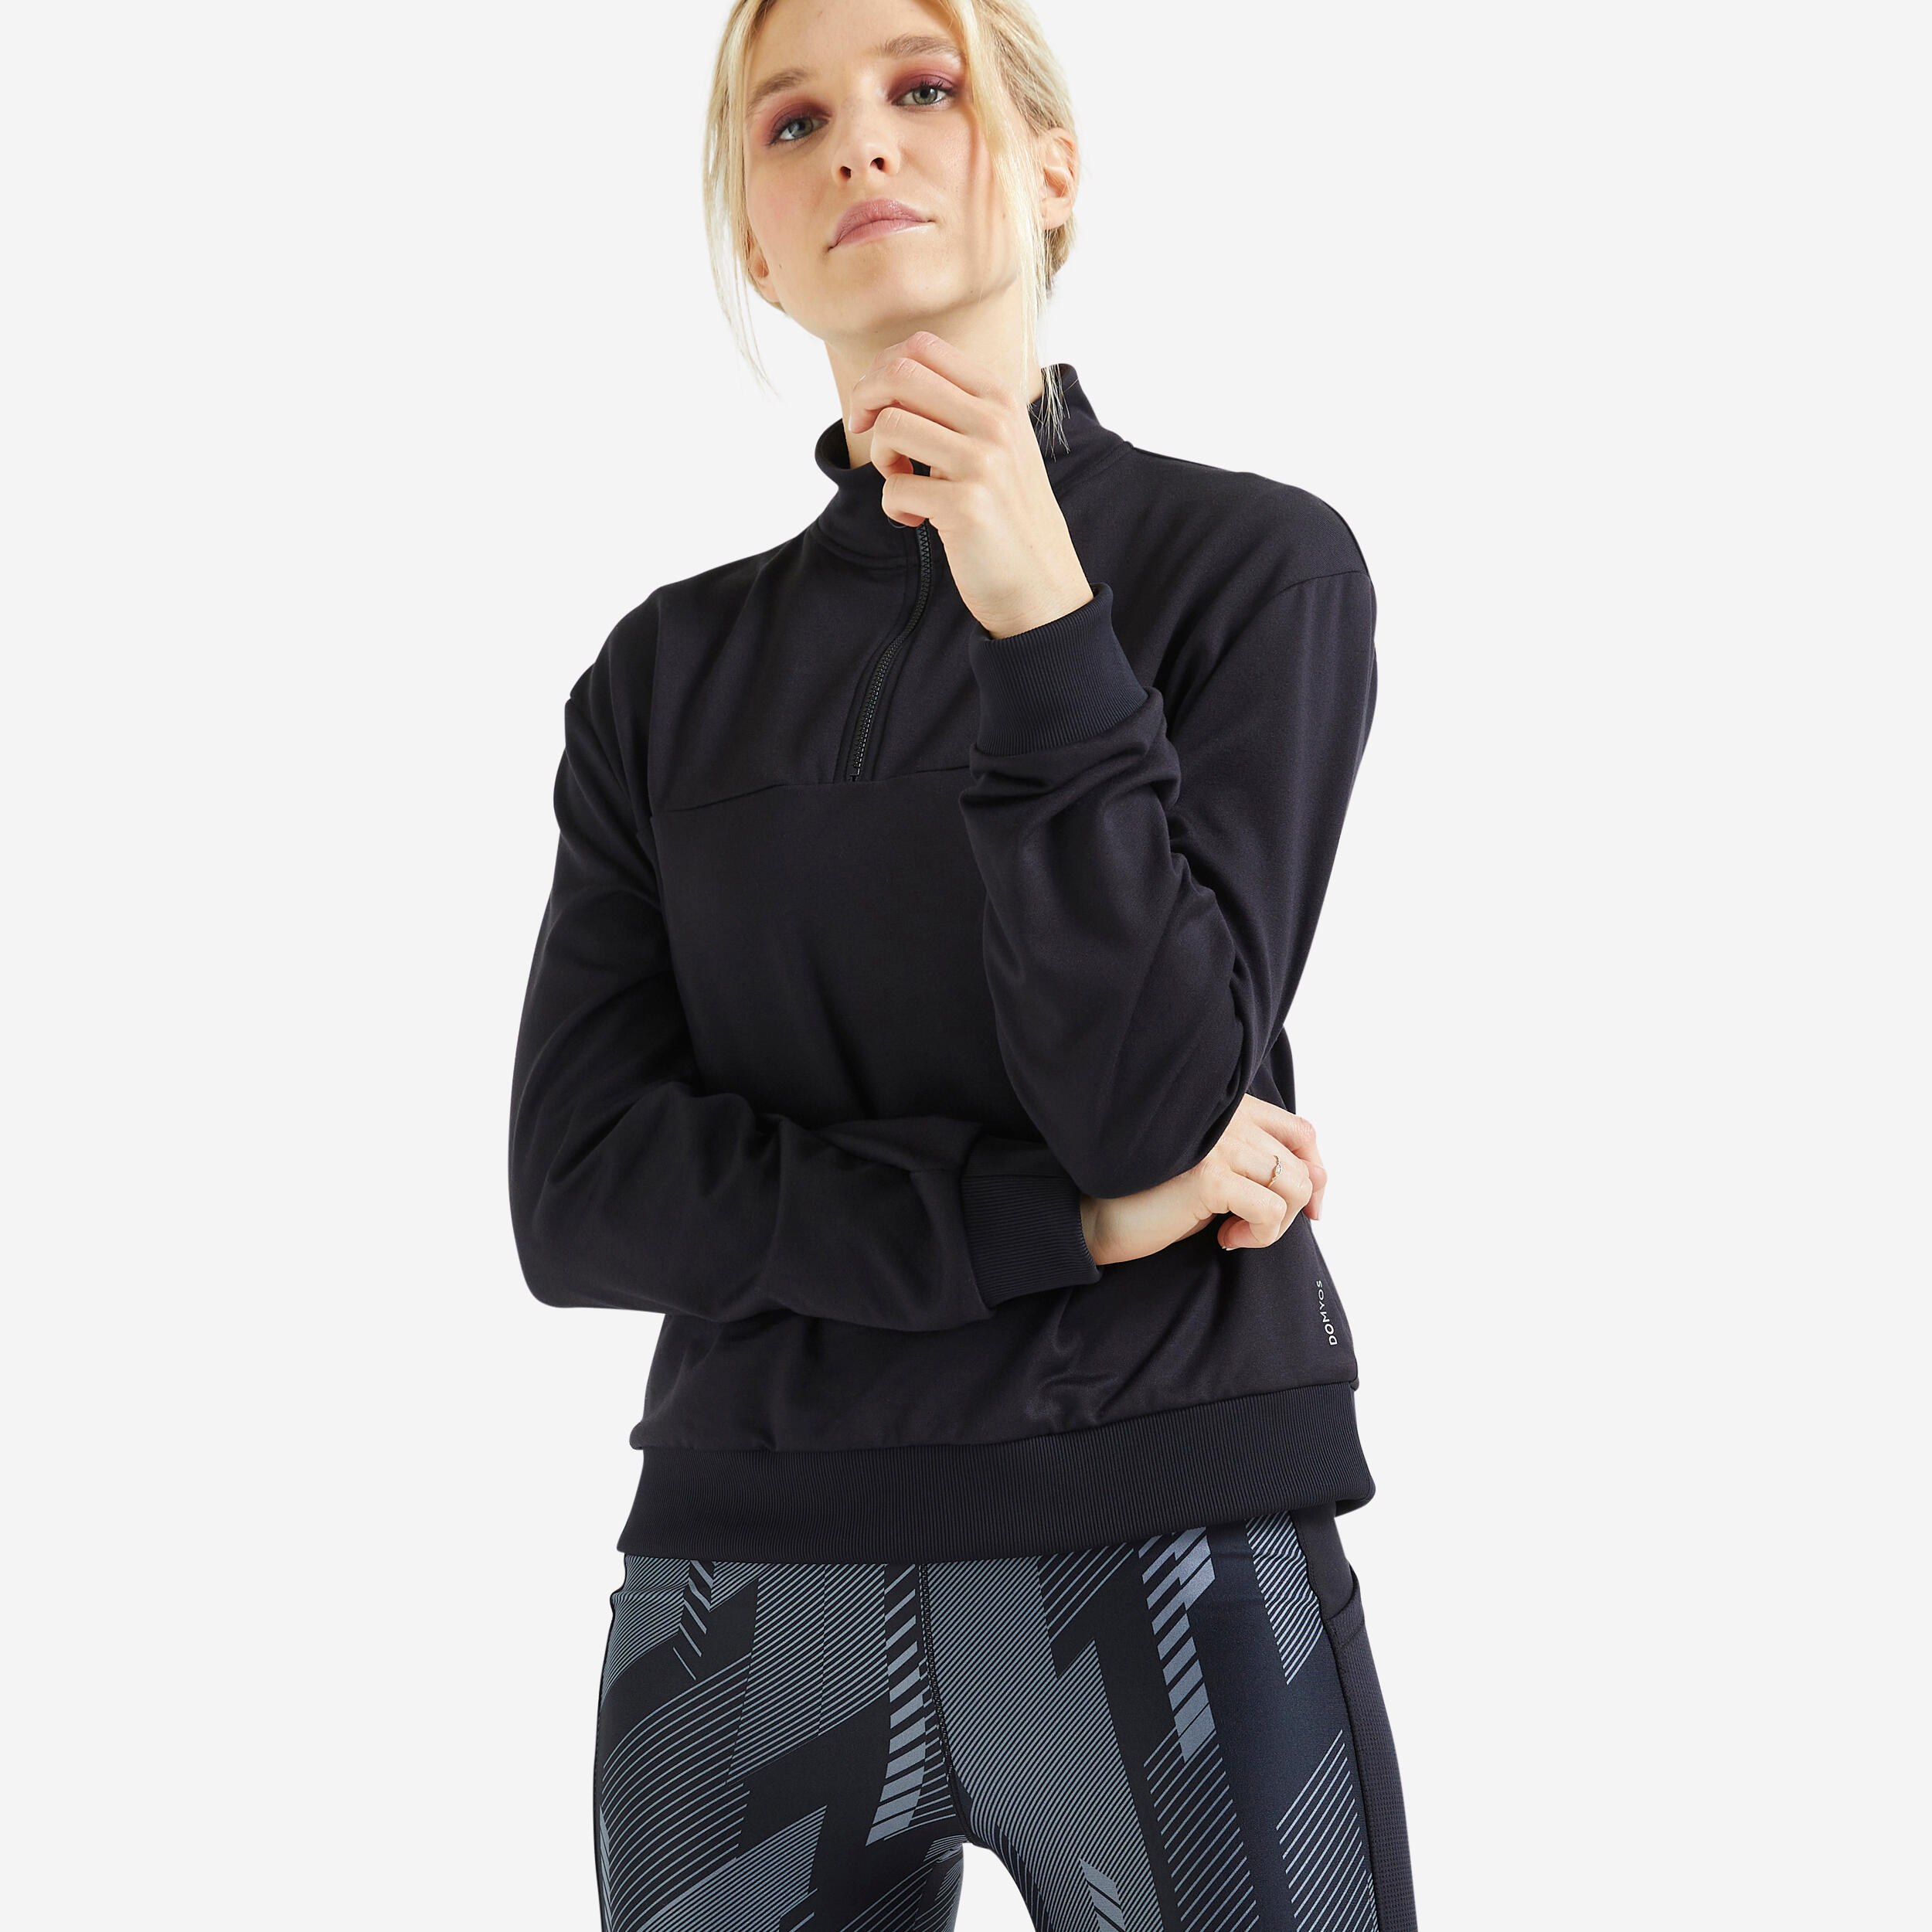 Women's Cropped Long-Sleeved Fitness Cardio Sweatshirt - Black 1/4